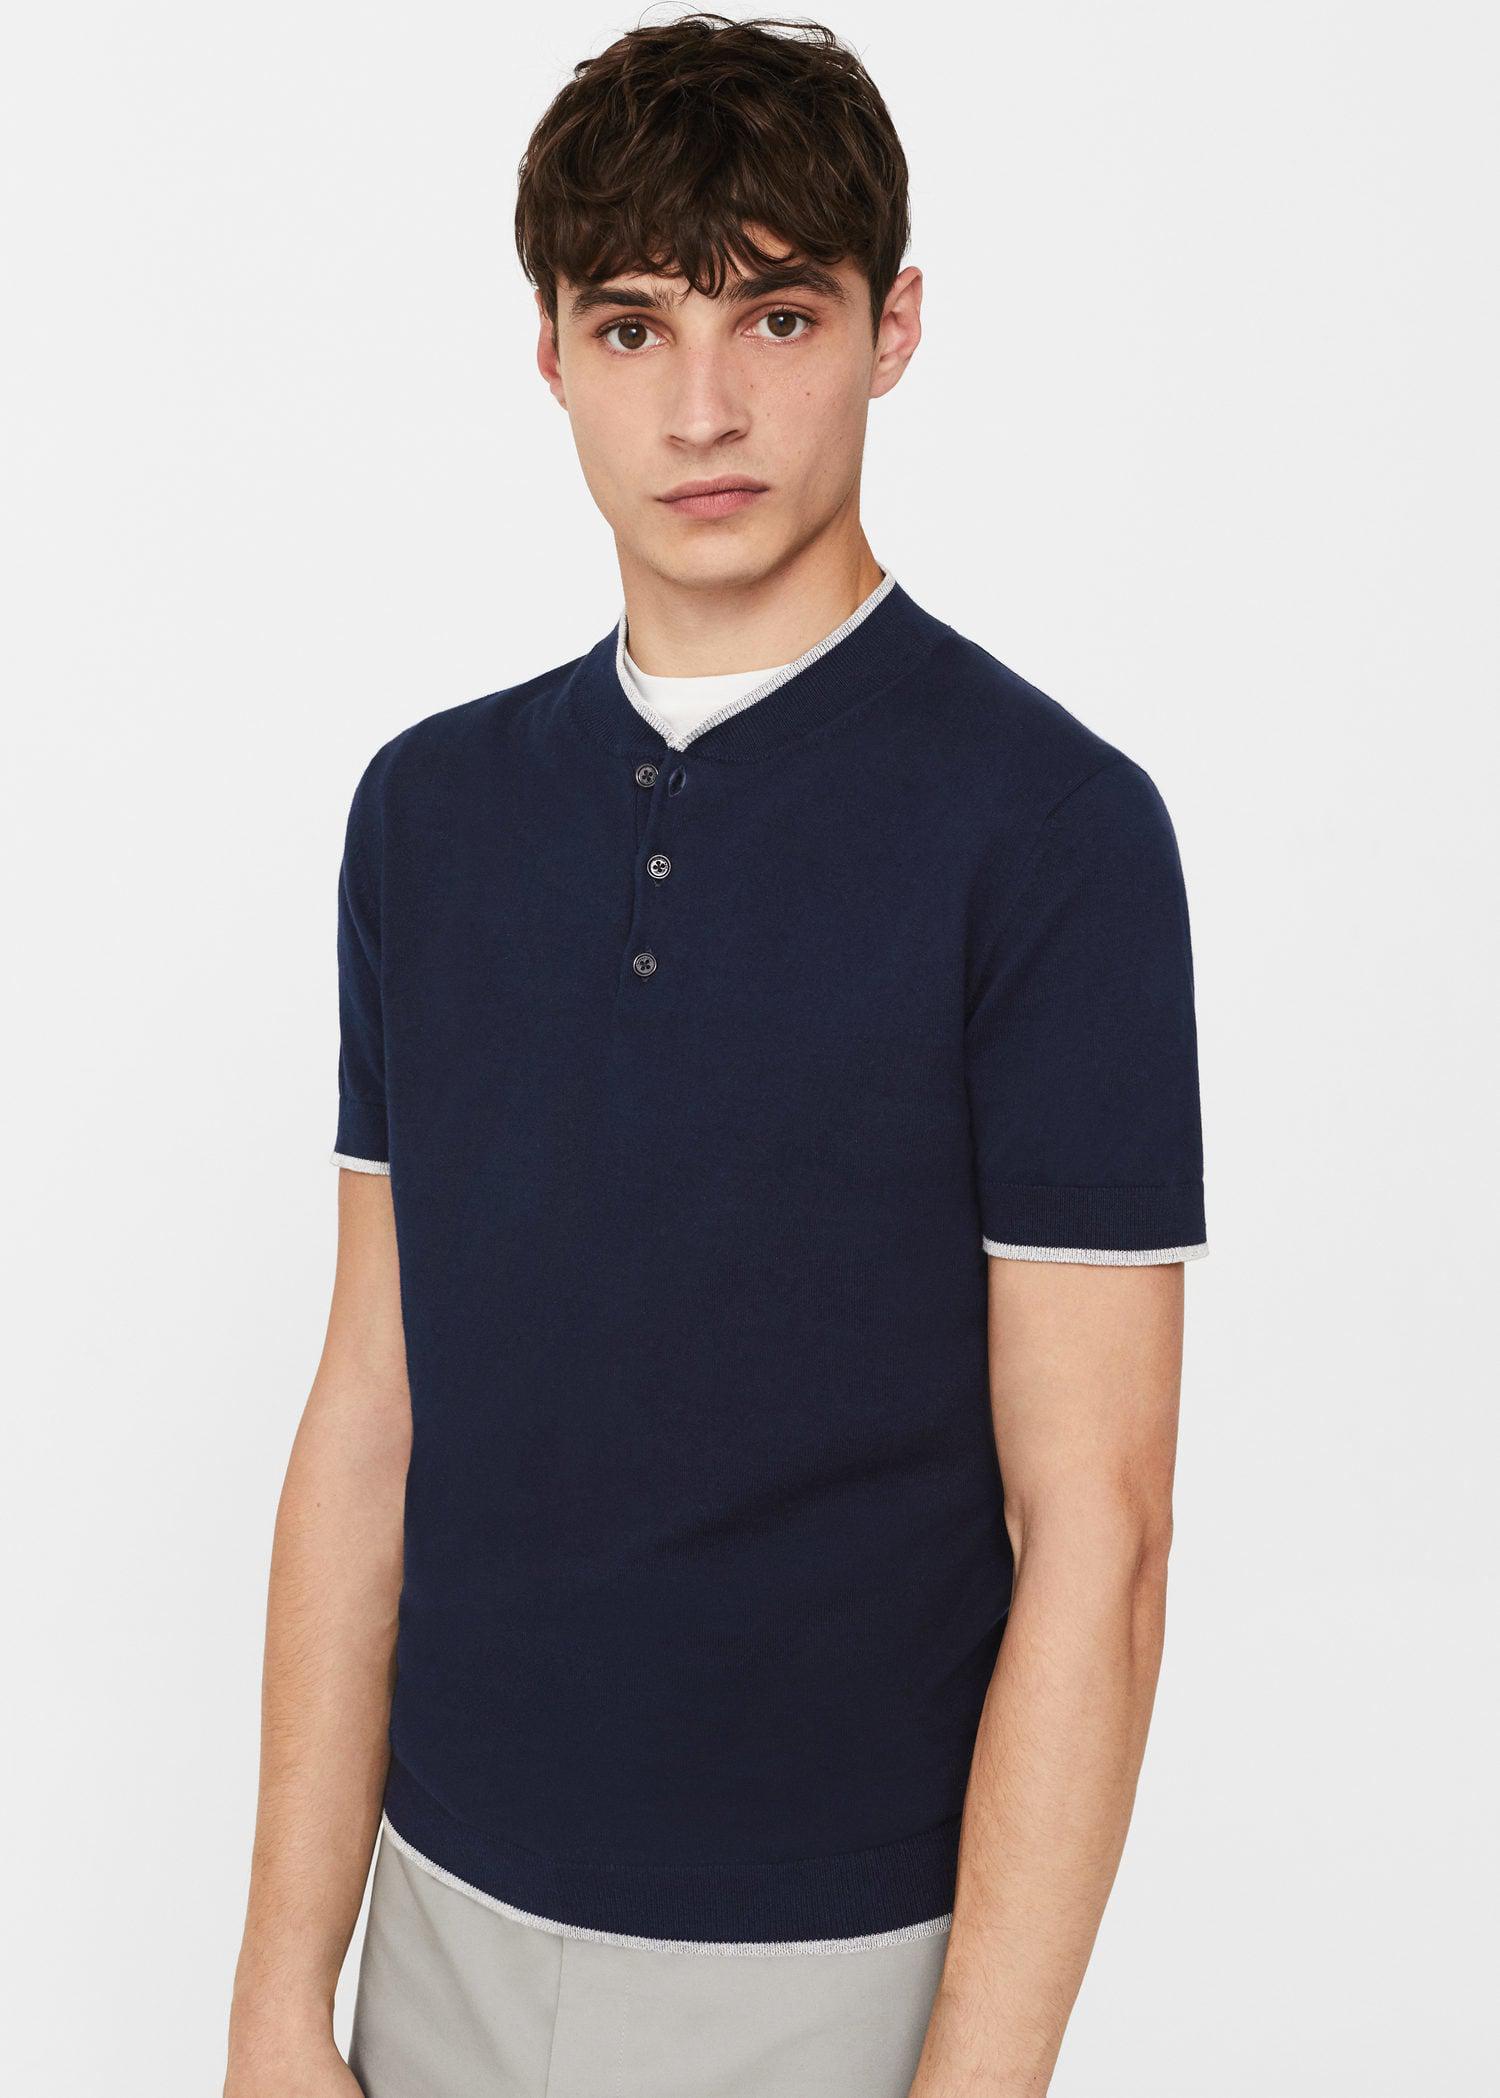 Mango Cotton Button-down Collar Polo Shirt in Navy (Blue) for Men - Lyst